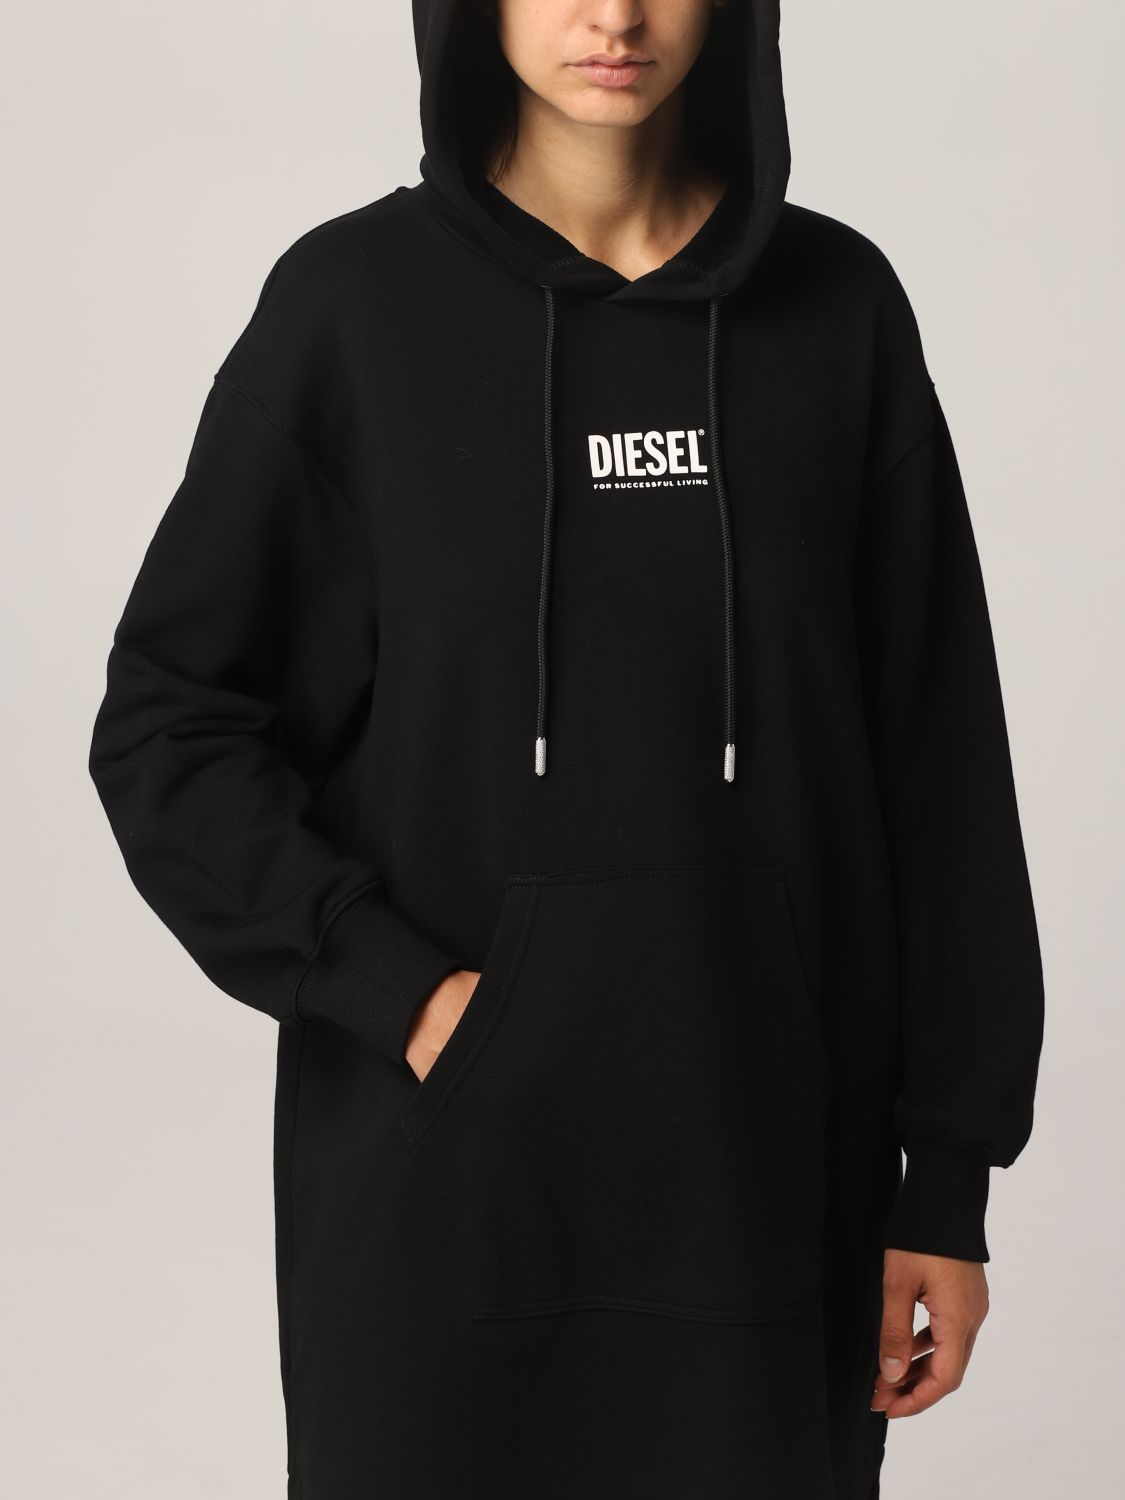 Diesel sweatshirt dress with logo